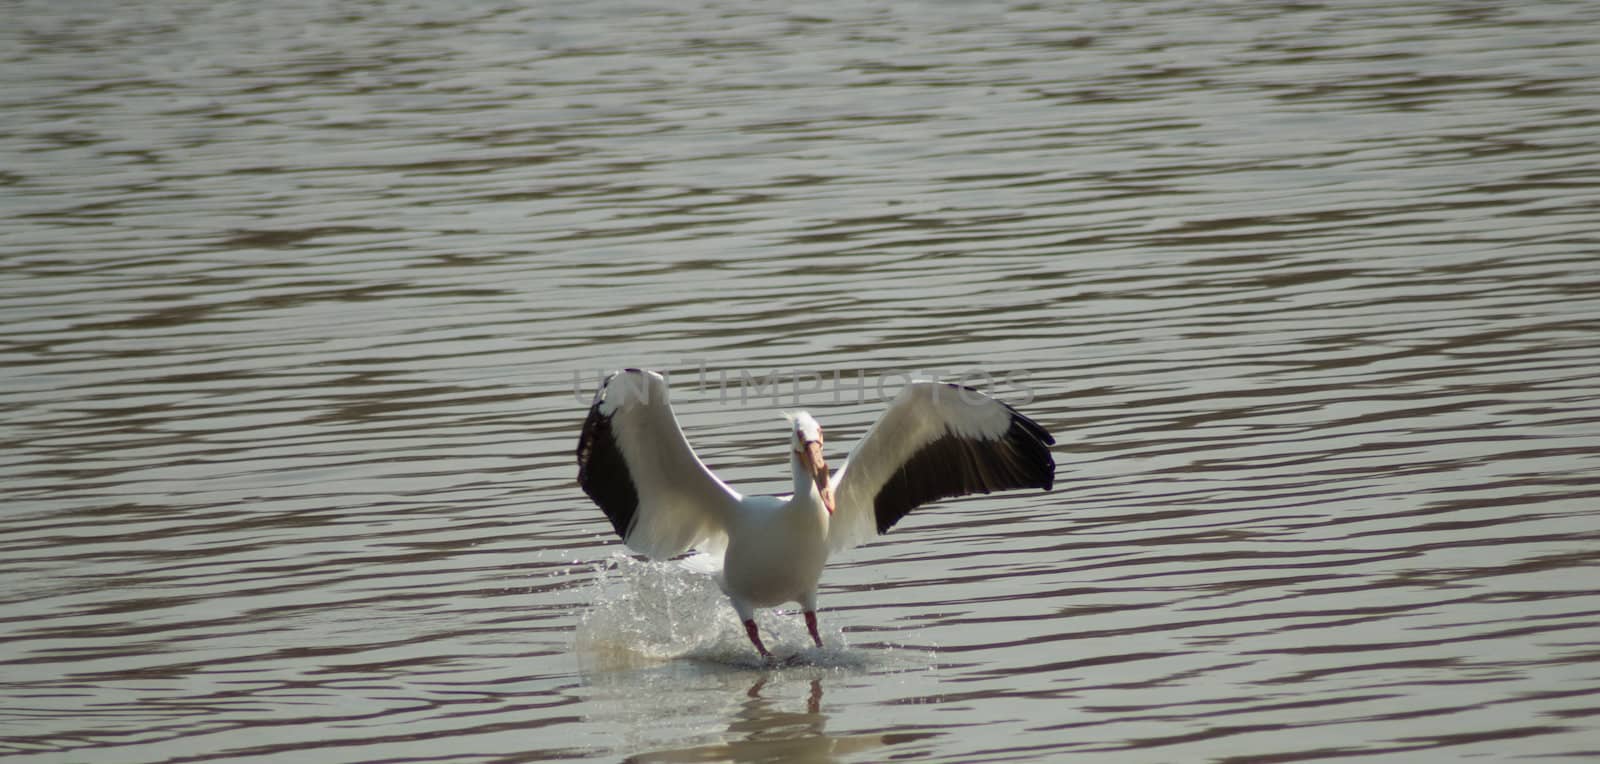 Pelican Landing in Water by dragon_fang